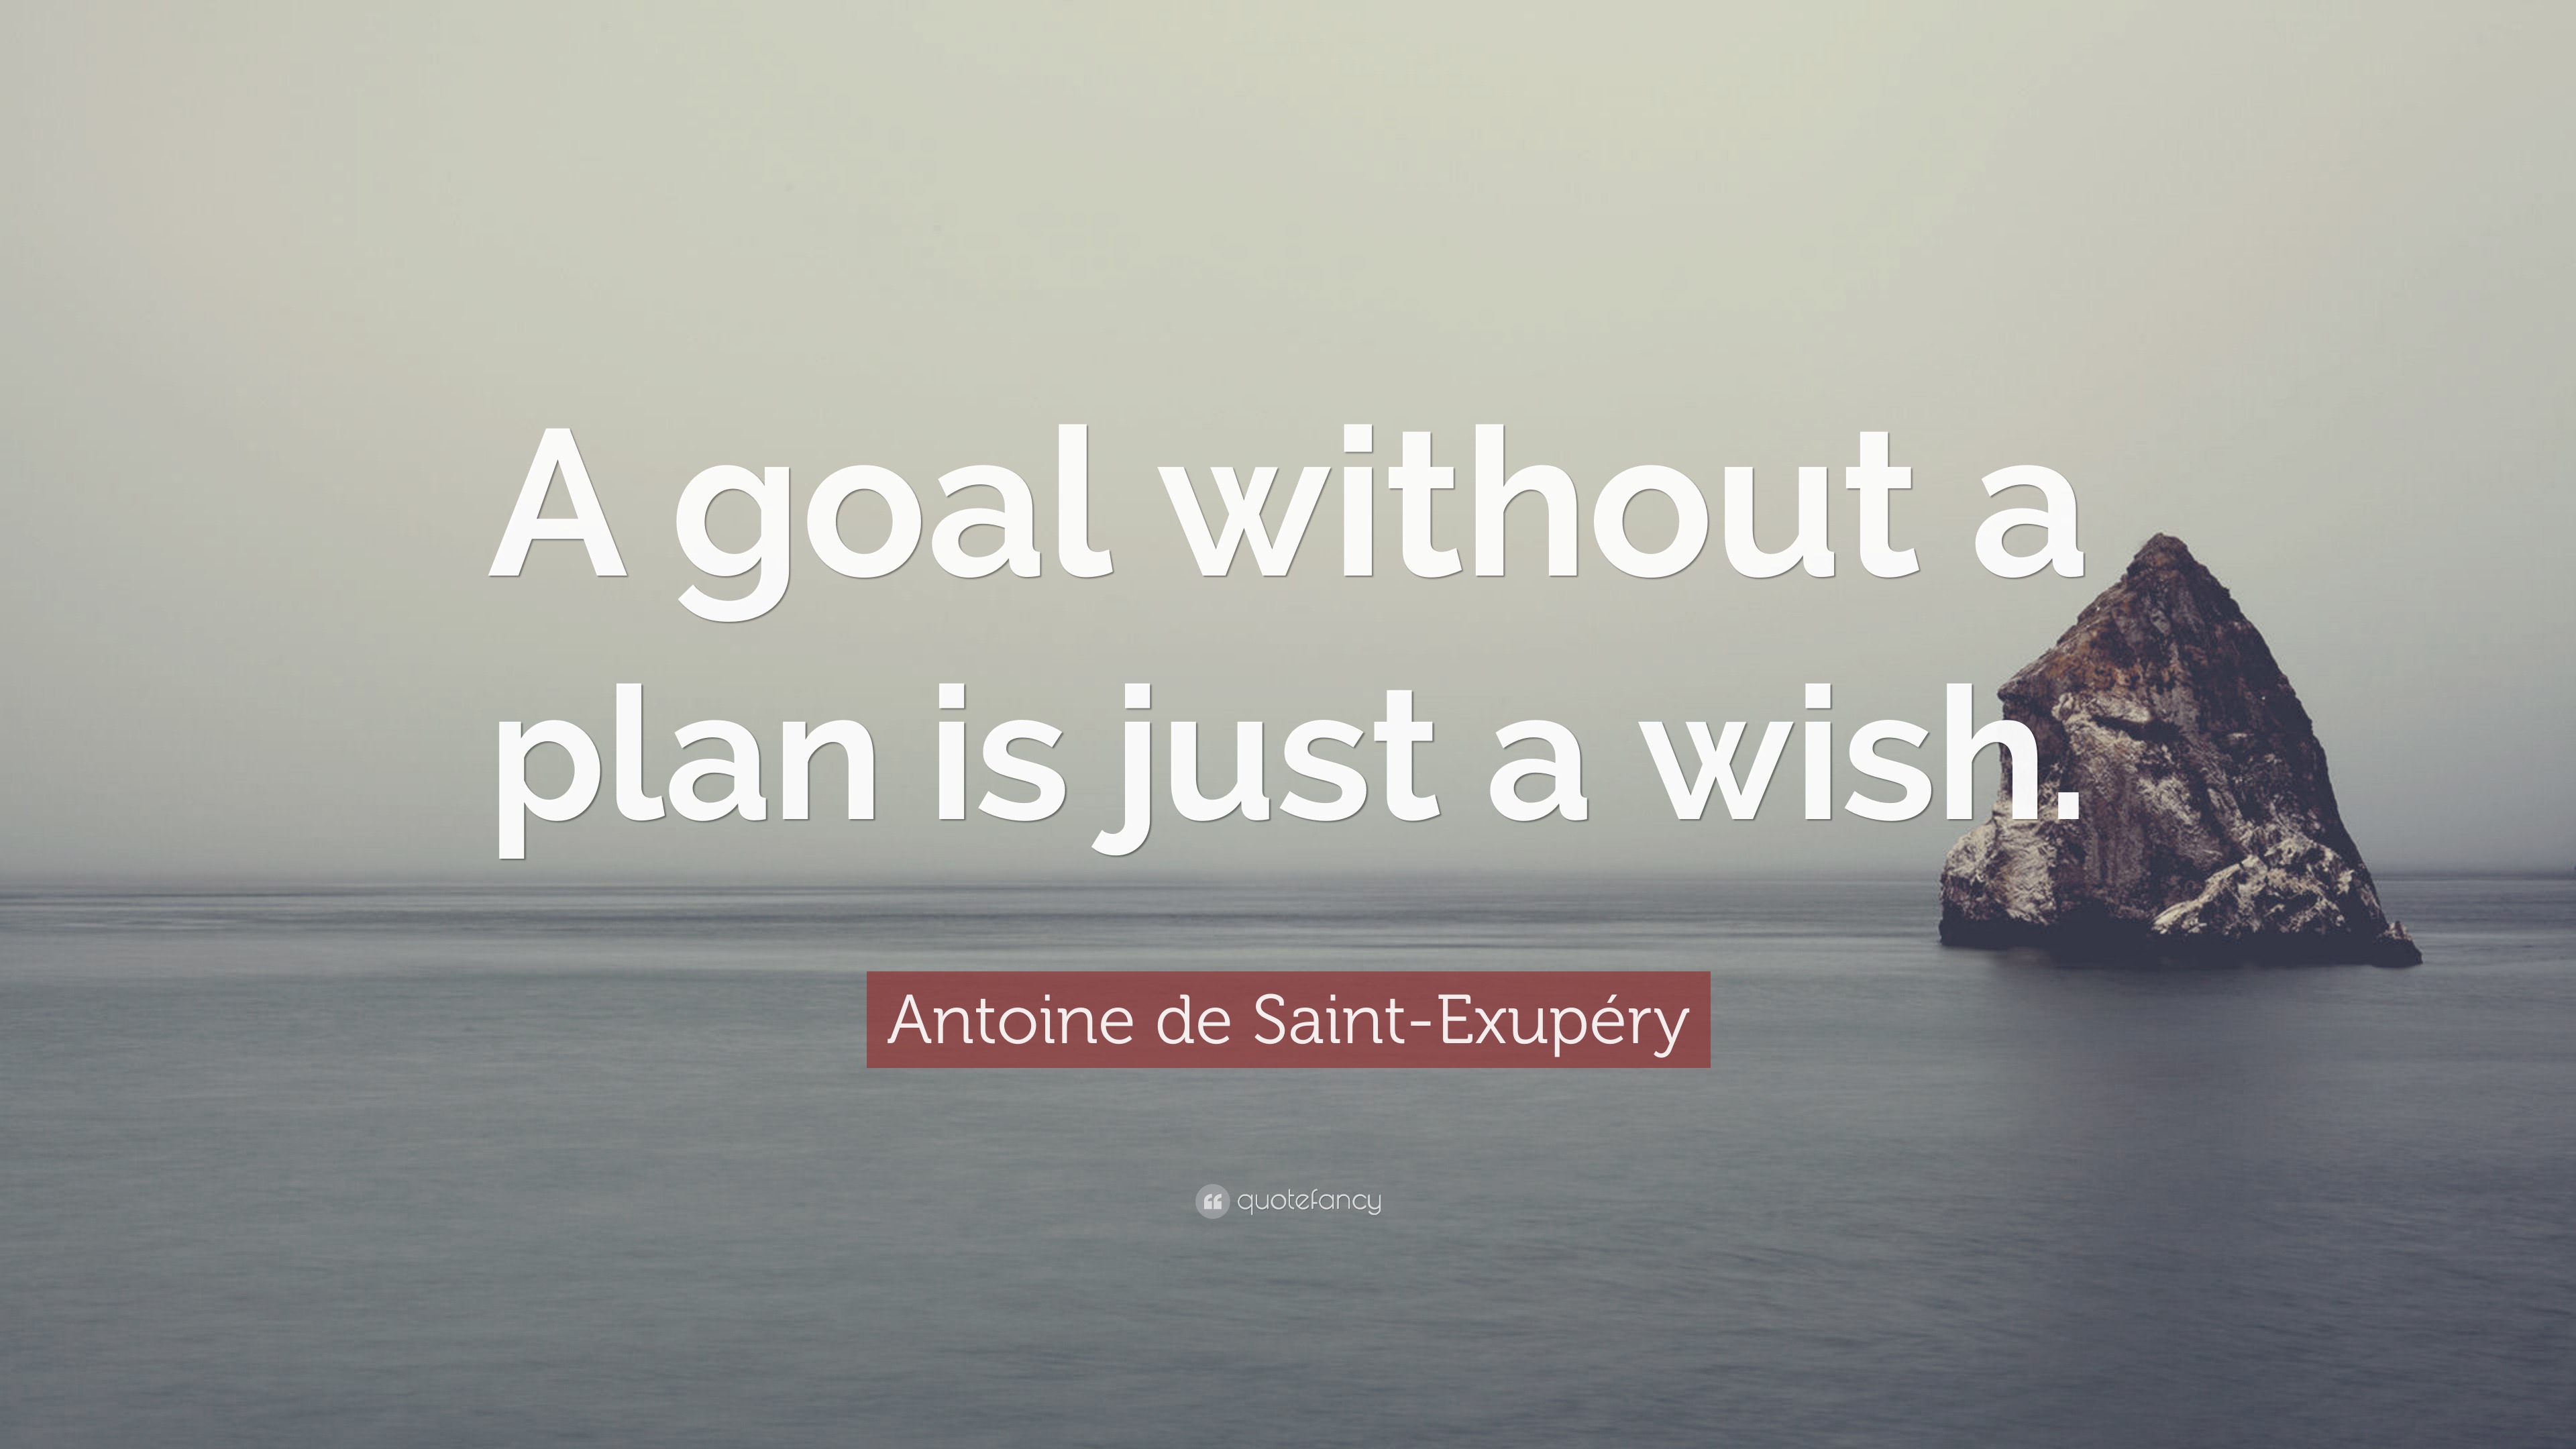 Antoine de Saint-Exupéry Quote: “A goal without a plan is just a wish